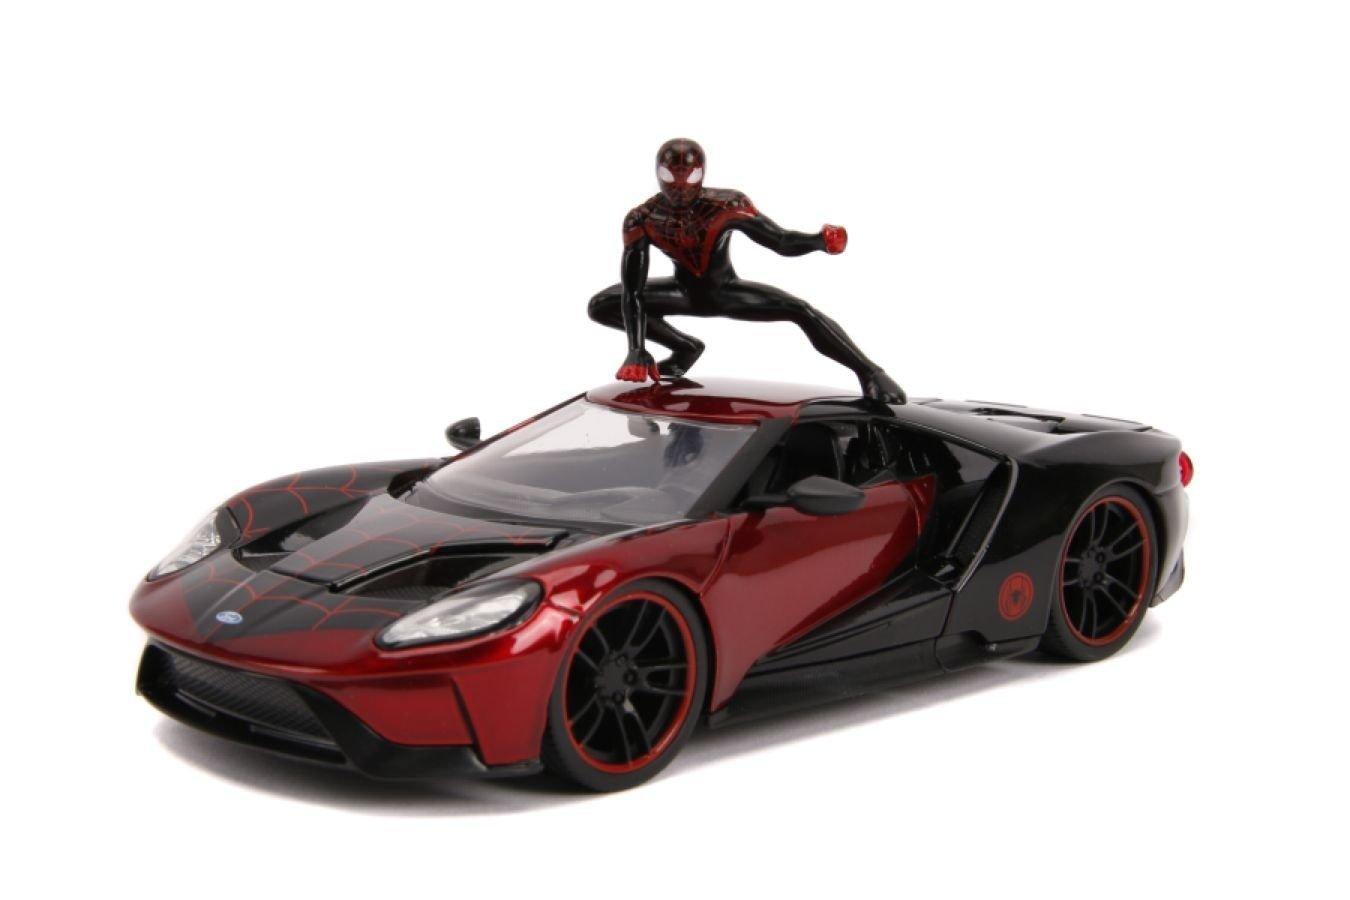 JAD31190 Marvel Comics - Miles Morales 2017 Ford GT 1:24 Scale Hollywood Ride - Jada Toys - Titan Pop Culture